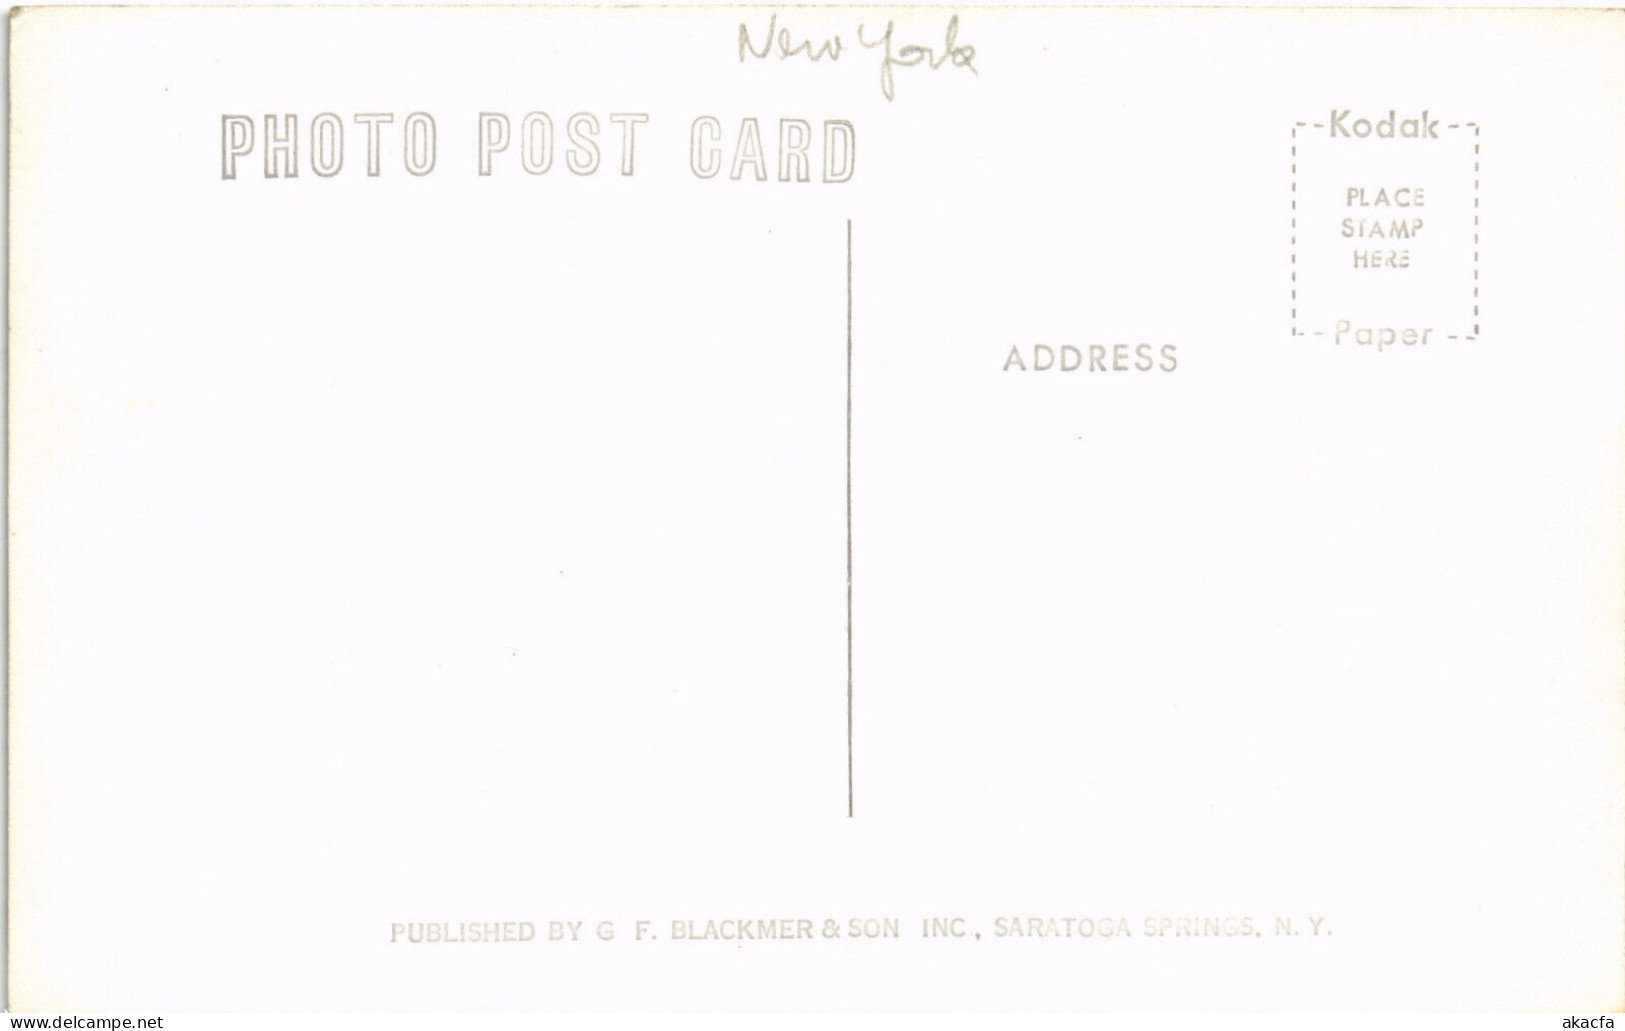 PC US, NY, SARATOGA SPRINGS, SKIDMORE COL, Vintage REAL PHOTO Postcard (b49540) - Saratoga Springs